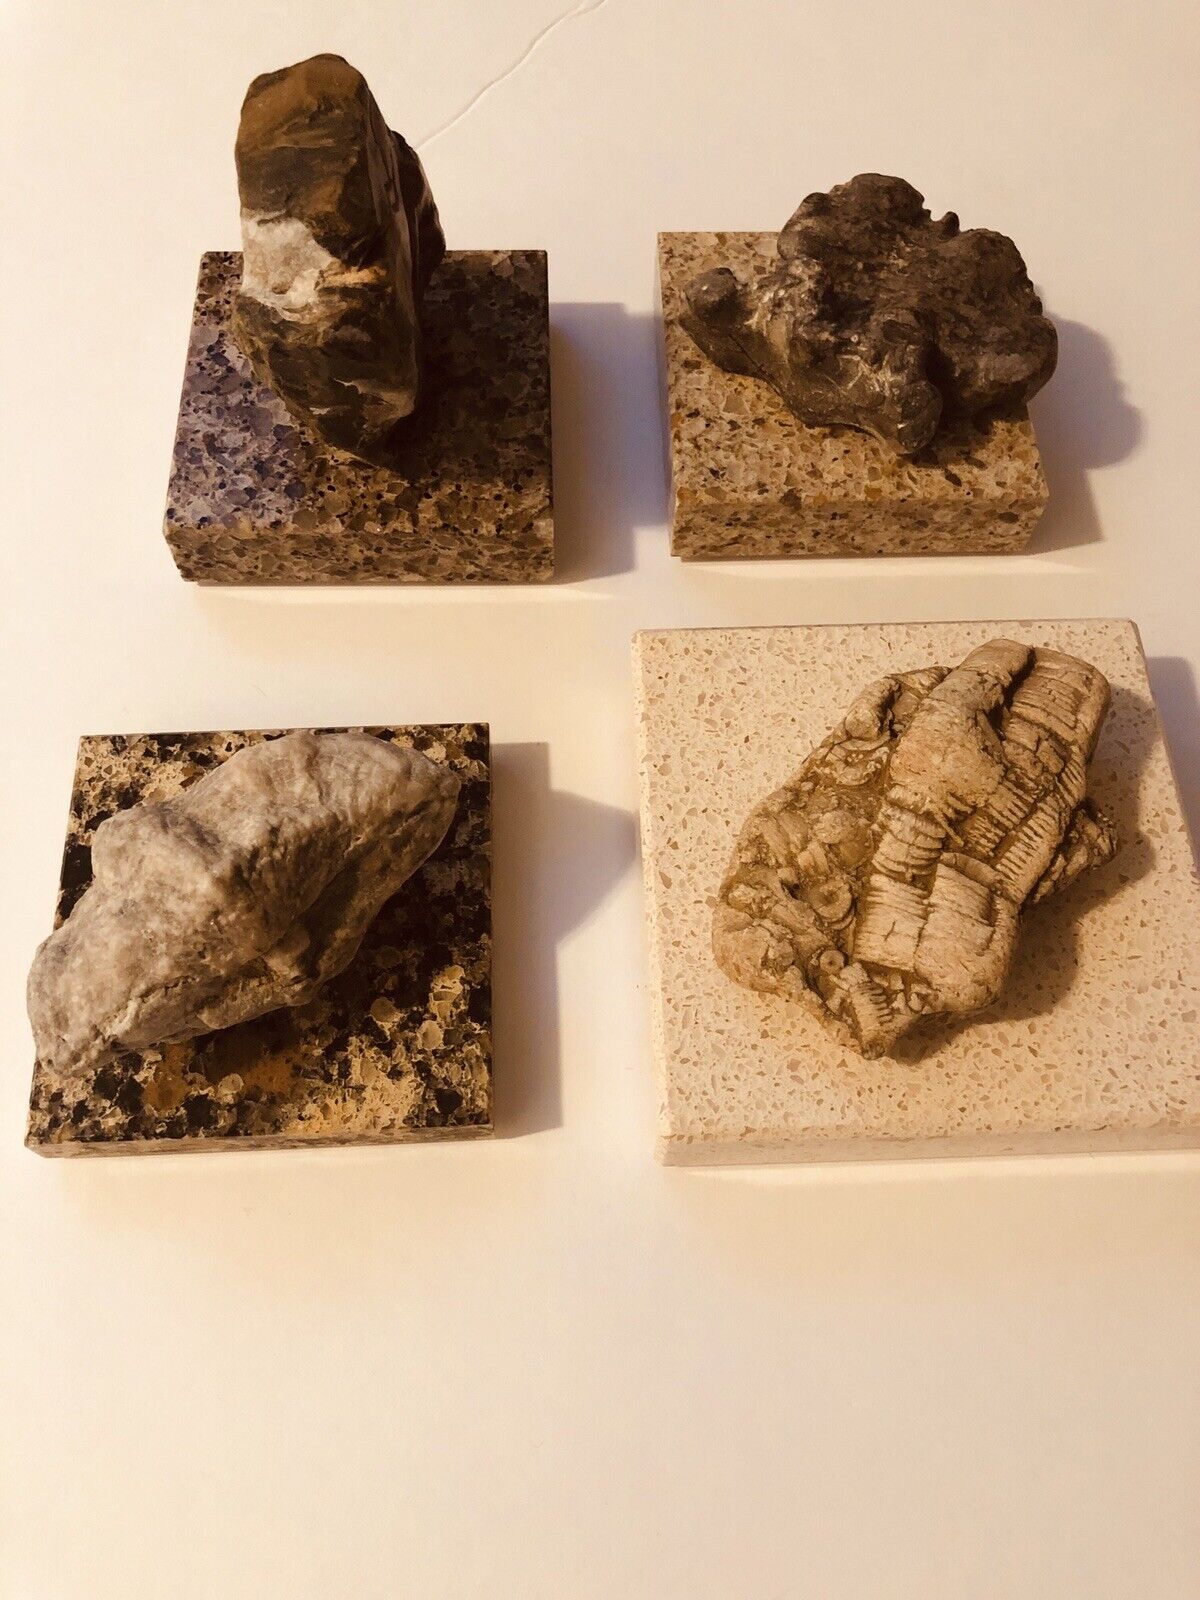 Rare 4 Fossils/Rocks- Sea Lilly, Nautiloids, Breccia, Cyglothyris Branchio